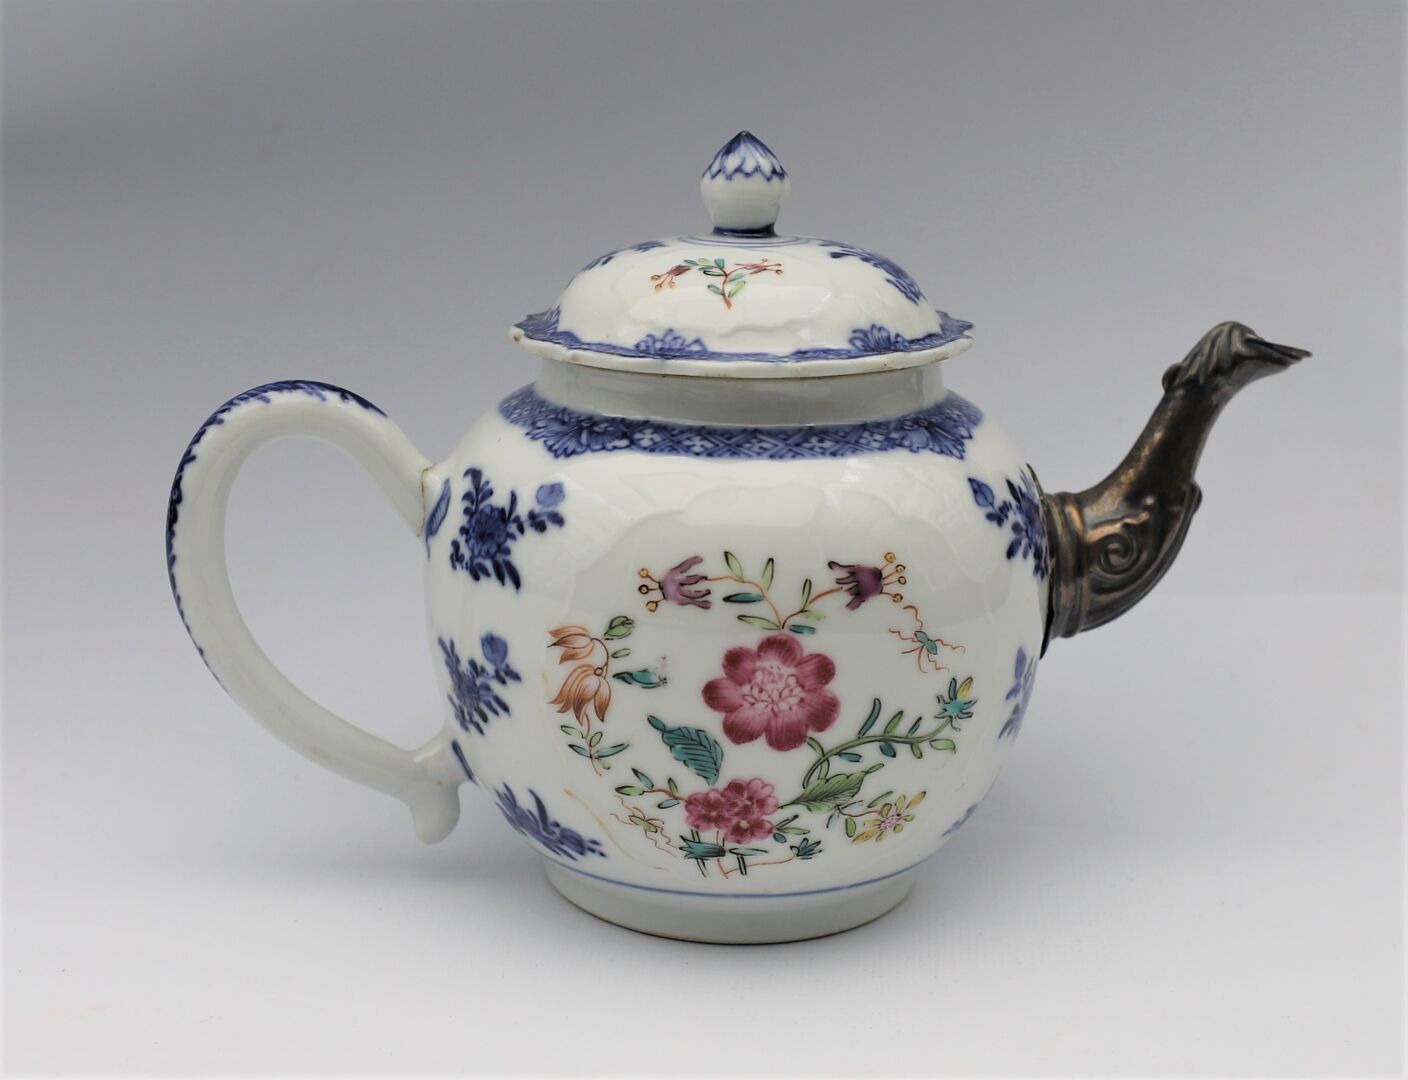 Null 一个漂亮的Famille Rose瓷器和多色珐琅茶壶，带有花卉装饰，银质壶嘴。中国，19世纪。

高度：13厘米。(手柄上有裂缝）。